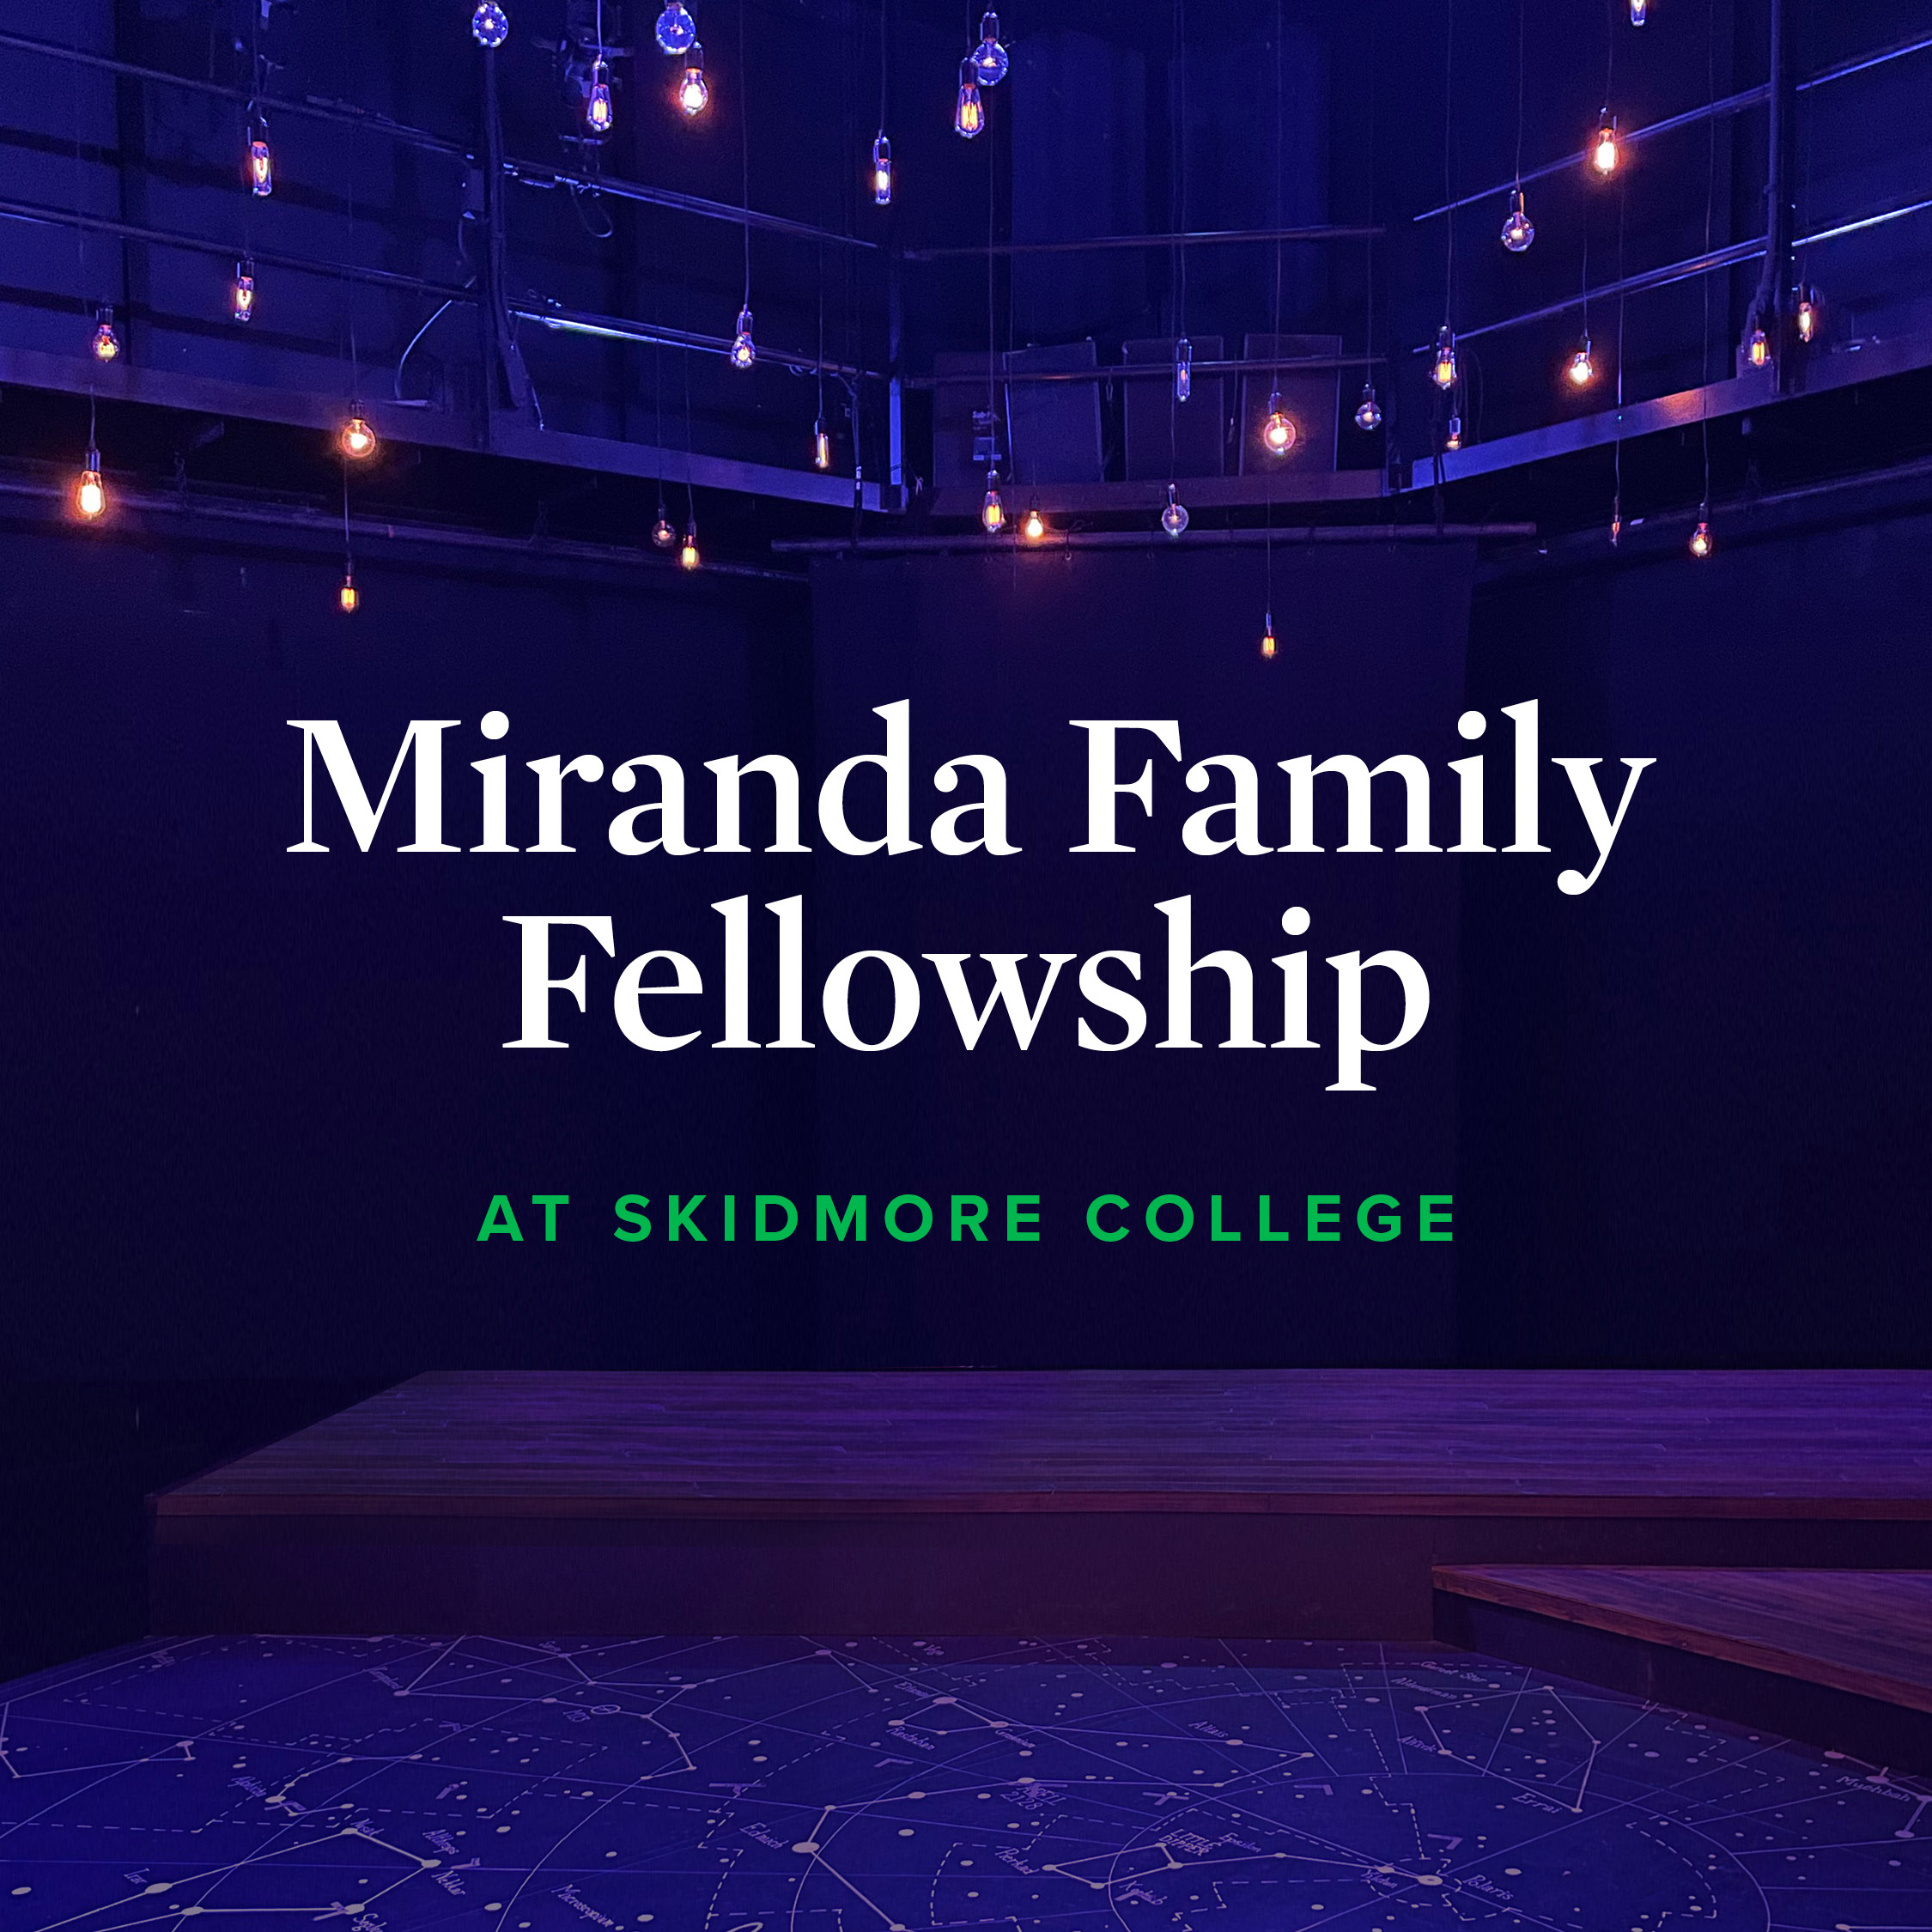 An image of the Miranda Family Fellowship